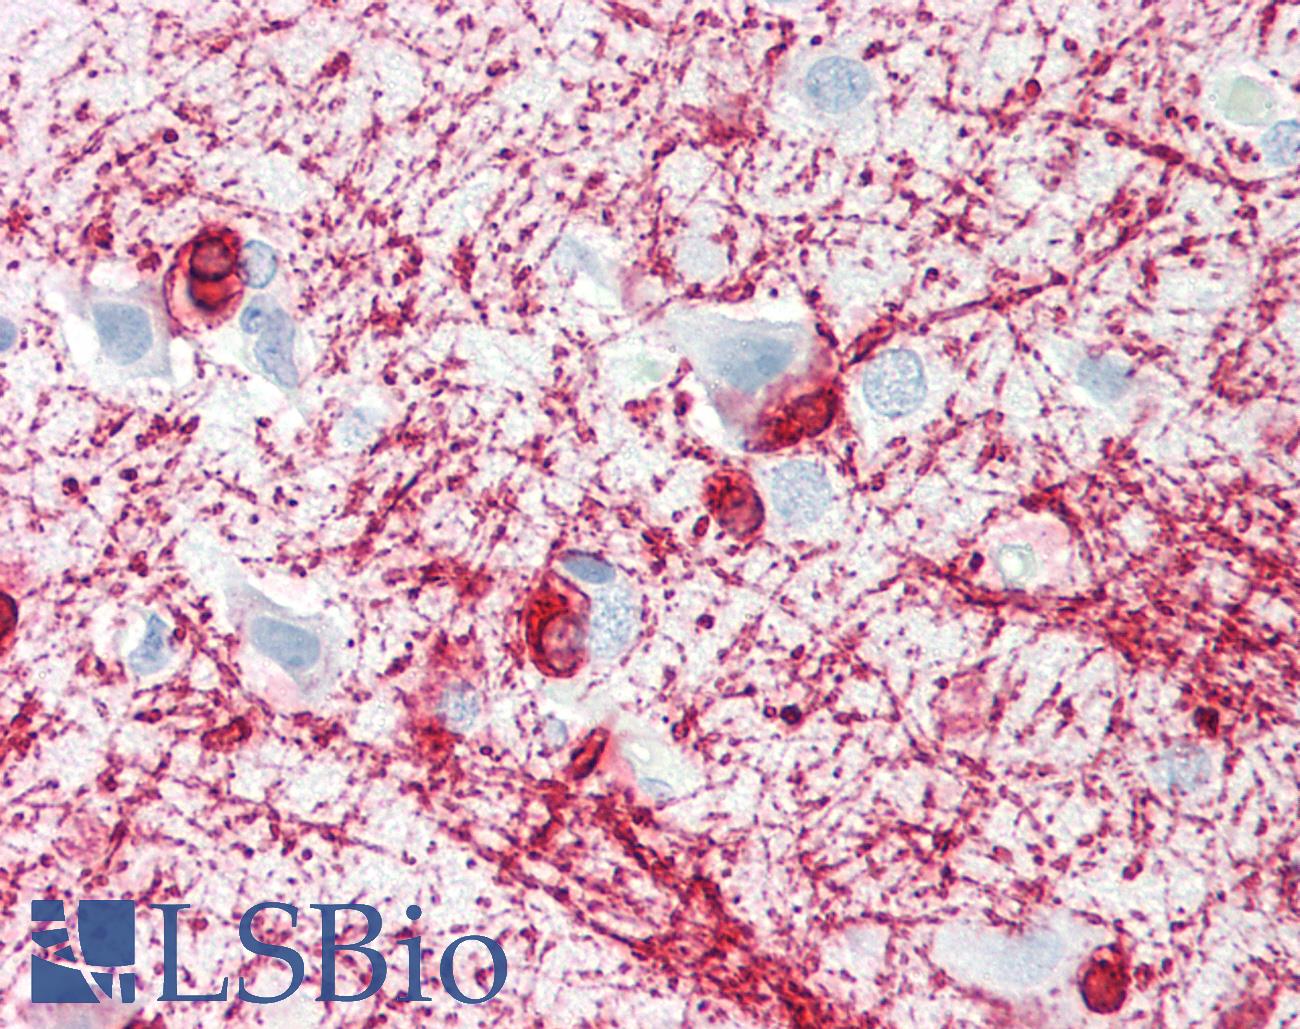 MBP / Myelin Basic Protein Antibody - Human Cortex: Formalin-Fixed, Paraffin-Embedded (FFPE)